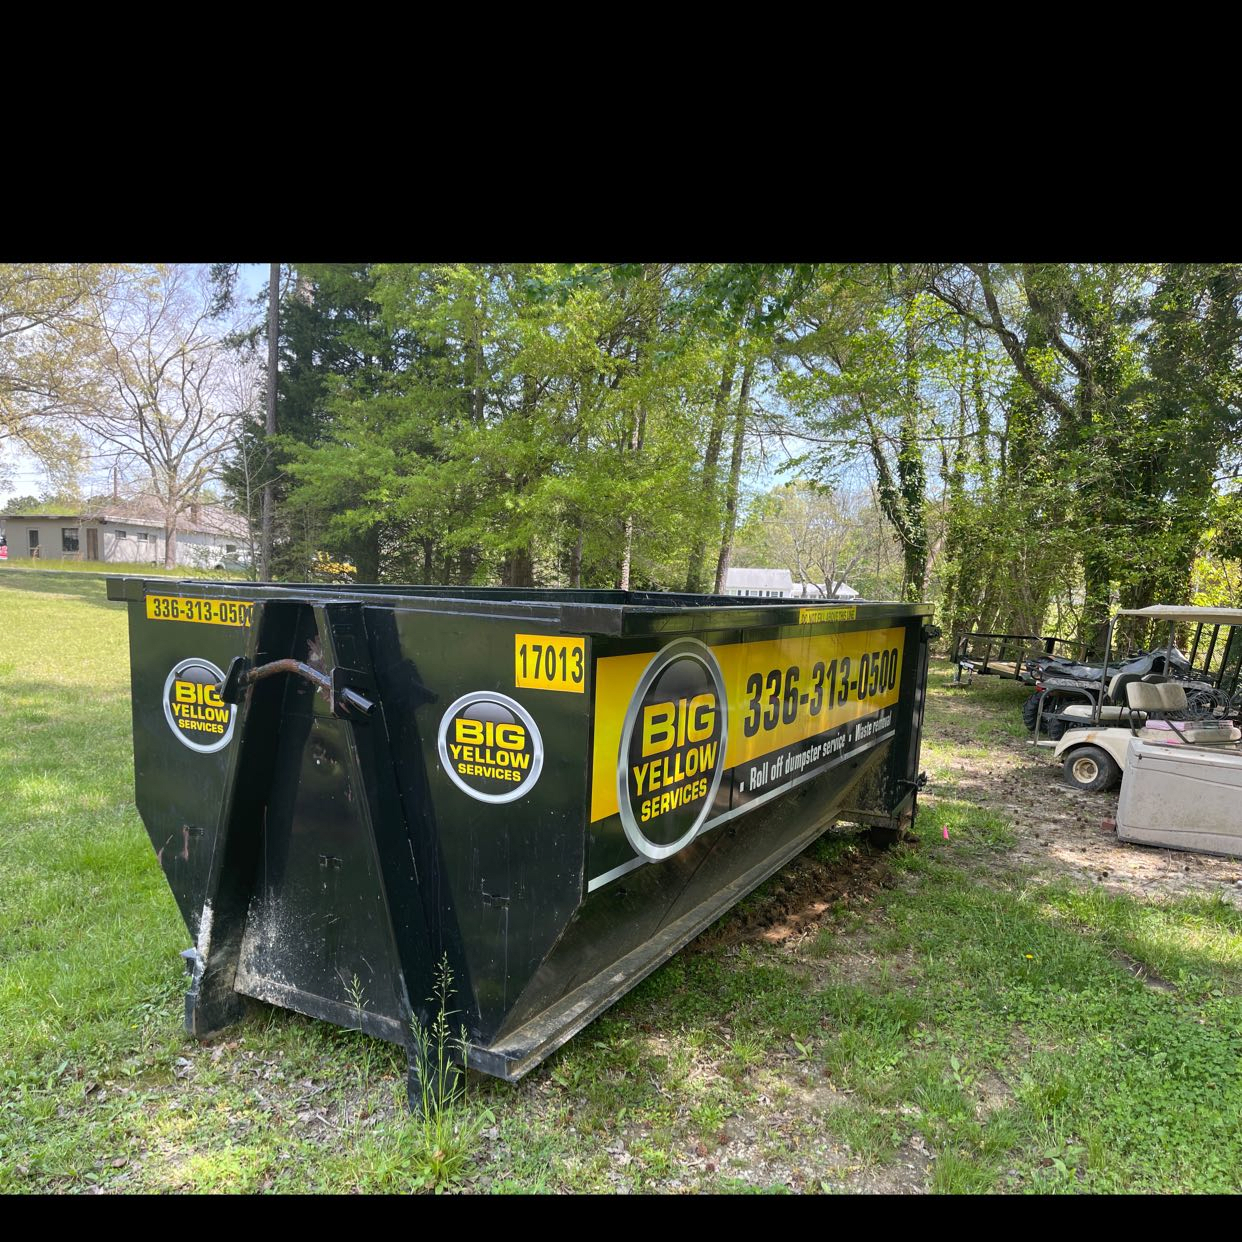 1820 Gerringer Road Elon, NC 27244 Dumpster Rental Dumpster Rental Customer Photos in Elon | Roll-Off Dumpster and Portable Toilet Rentals | Big Yellow Services, LLC